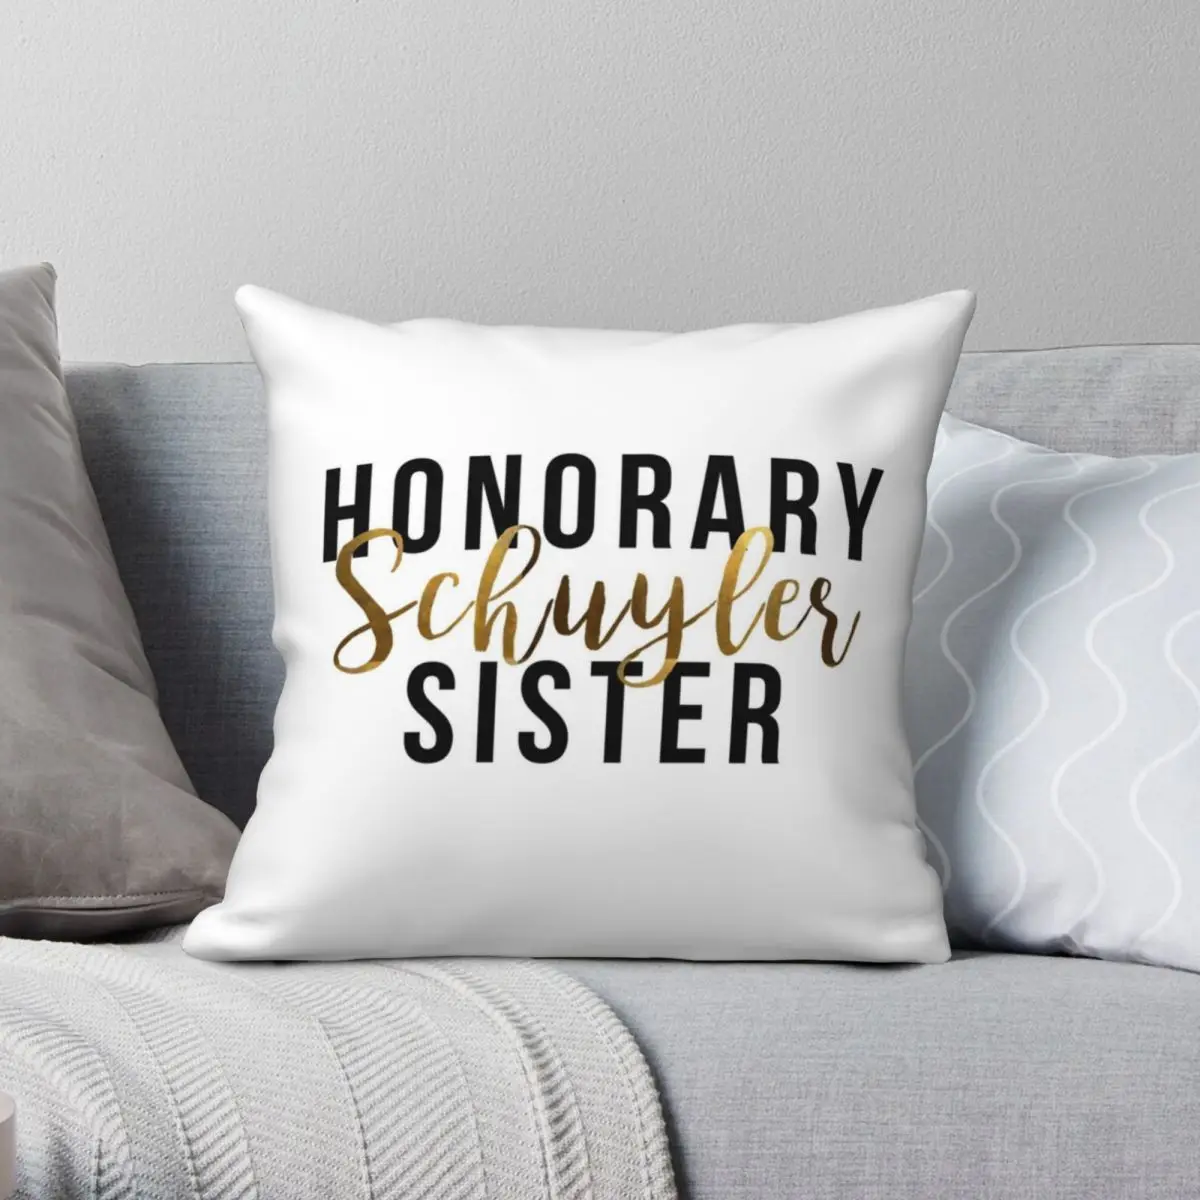 

Honorary Schuyler Sister Gold Foil Square Pillowcase Polyester Linen Velvet Zip Decorative Pillow Case Home Cushion Cover